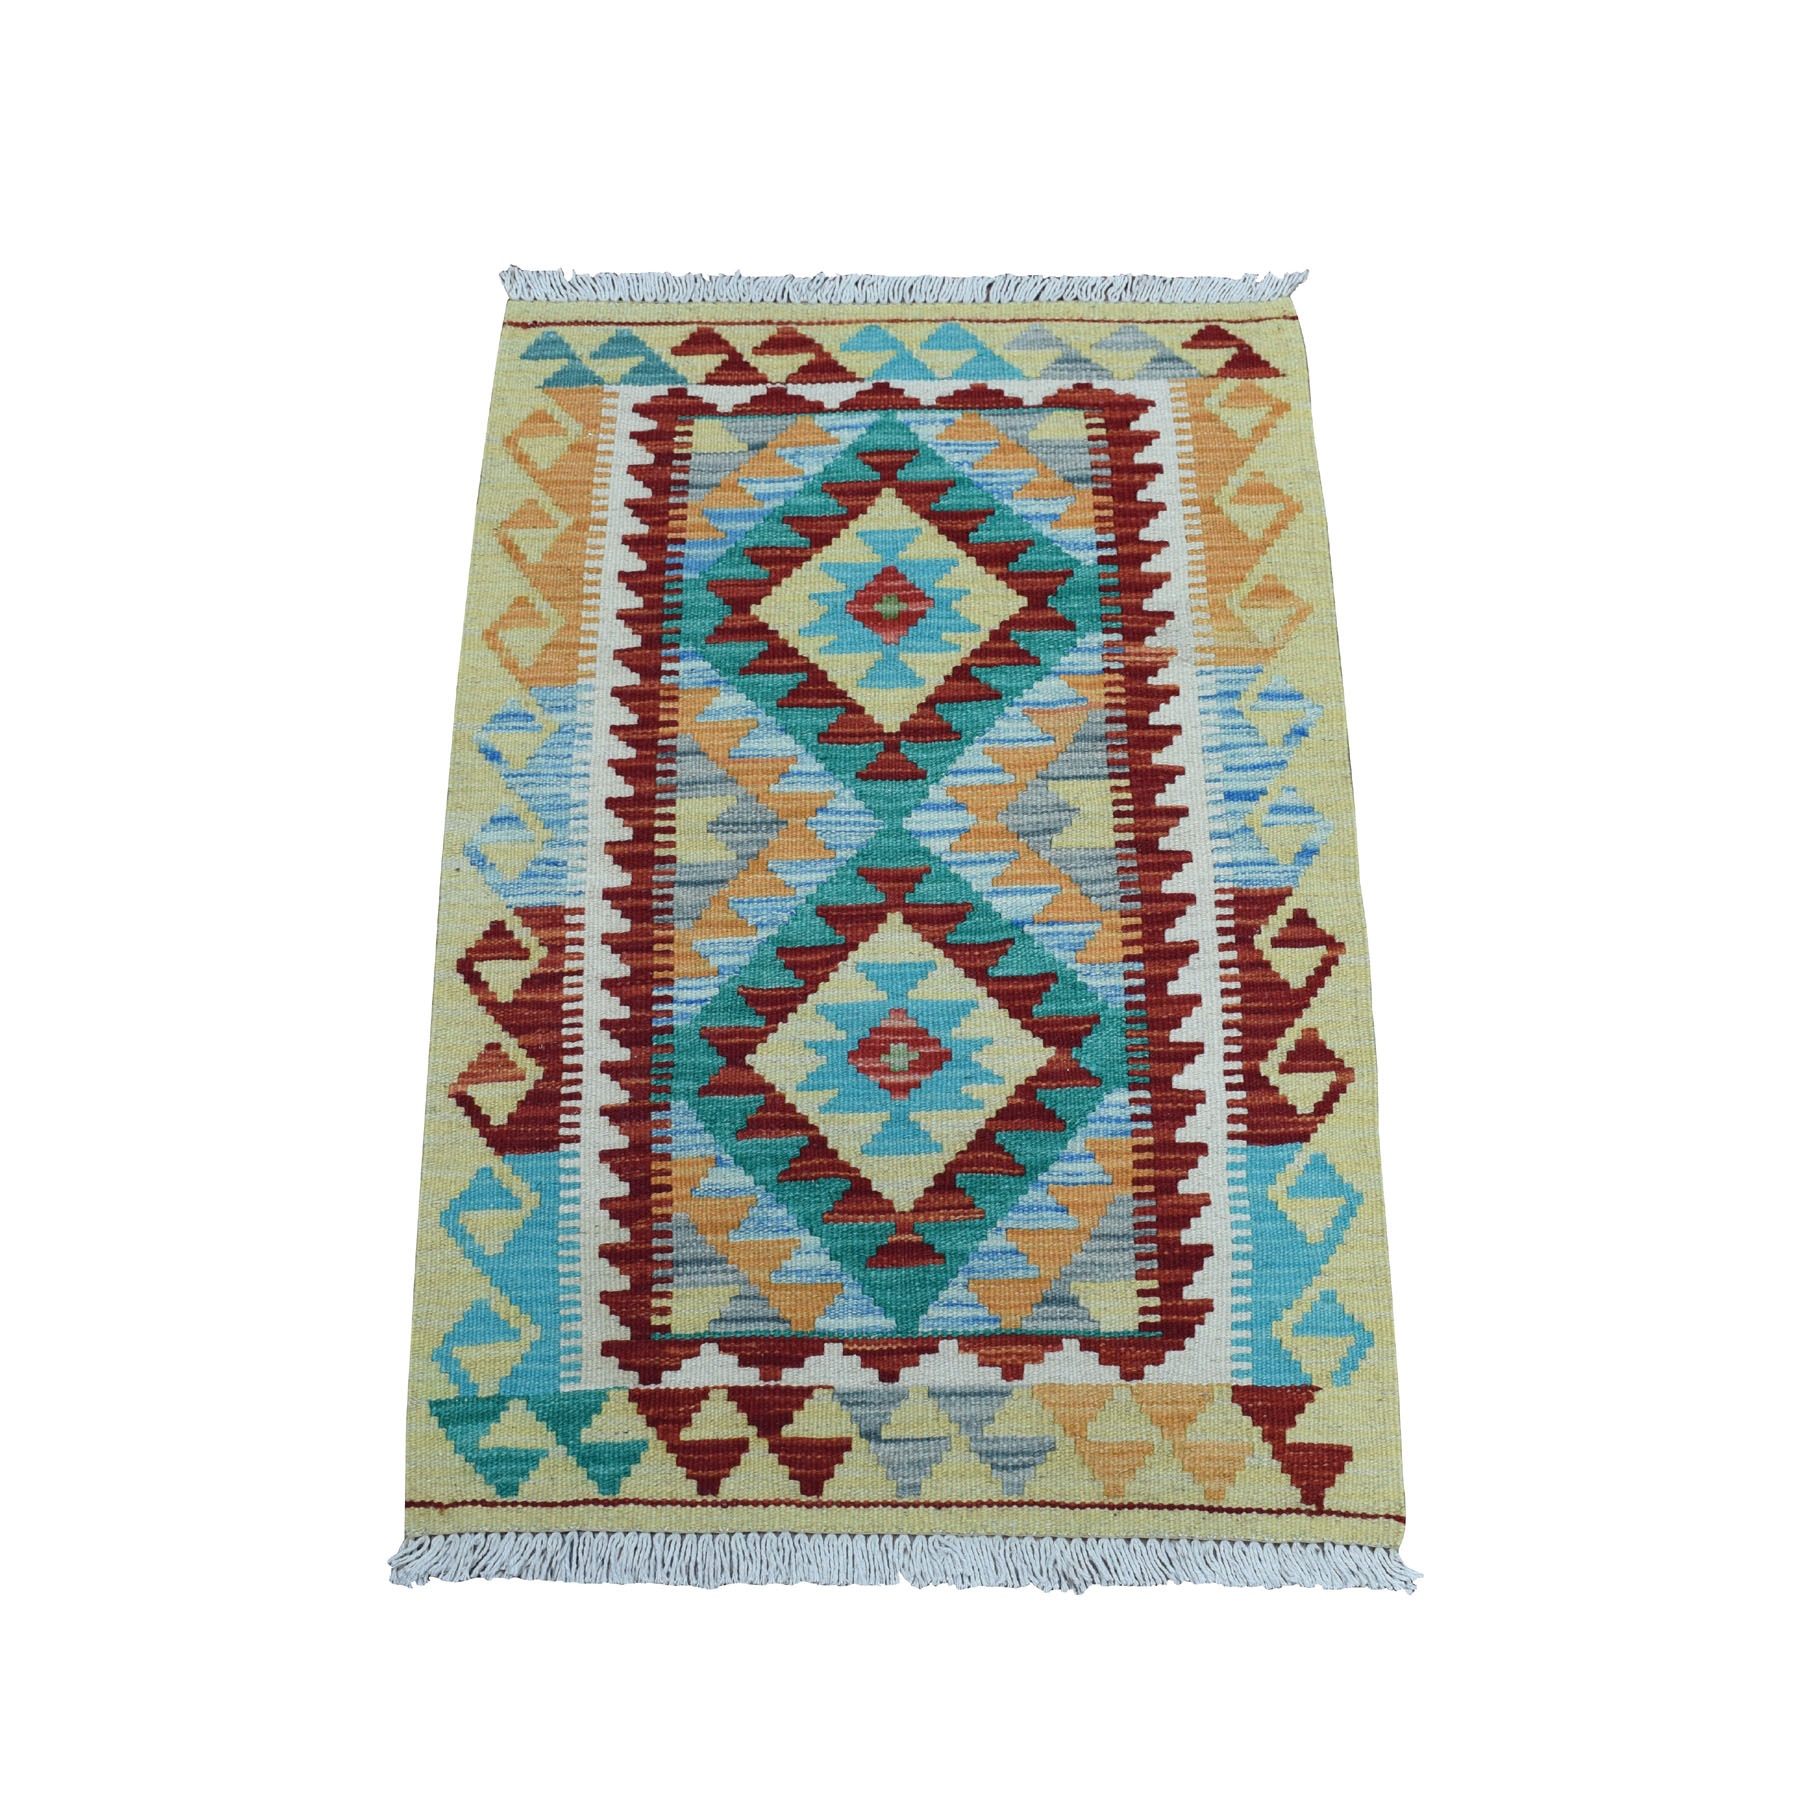 2'x2'9" Colorful Afghan Kilim Pure Wool Hand Woven Oriental Rug 